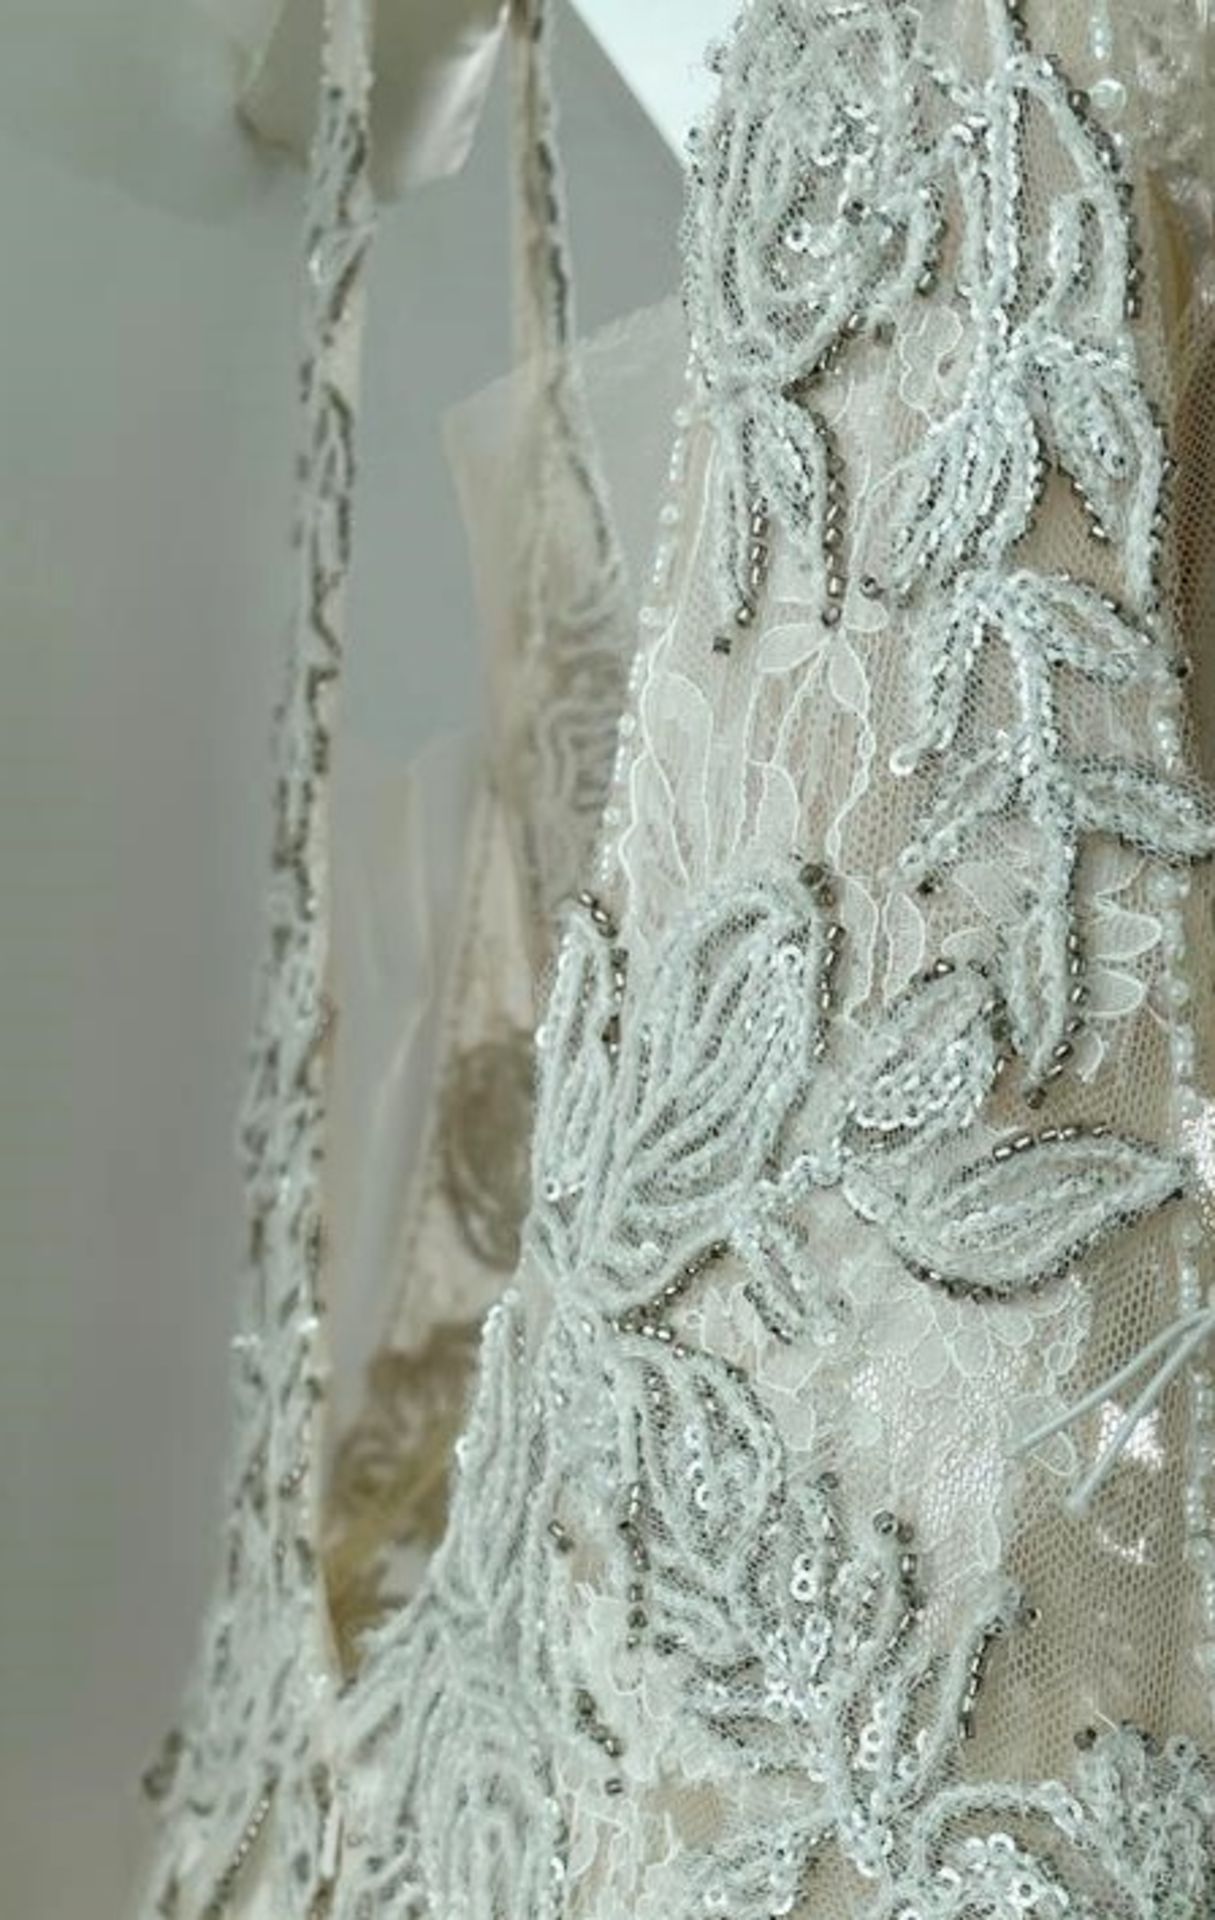 1 x ANNASUL Y 'Cameron' Designer Wedding Dress Bridal Gown - Size: UK 12 - Ref: DRS043 - CL823 - - Image 11 of 13